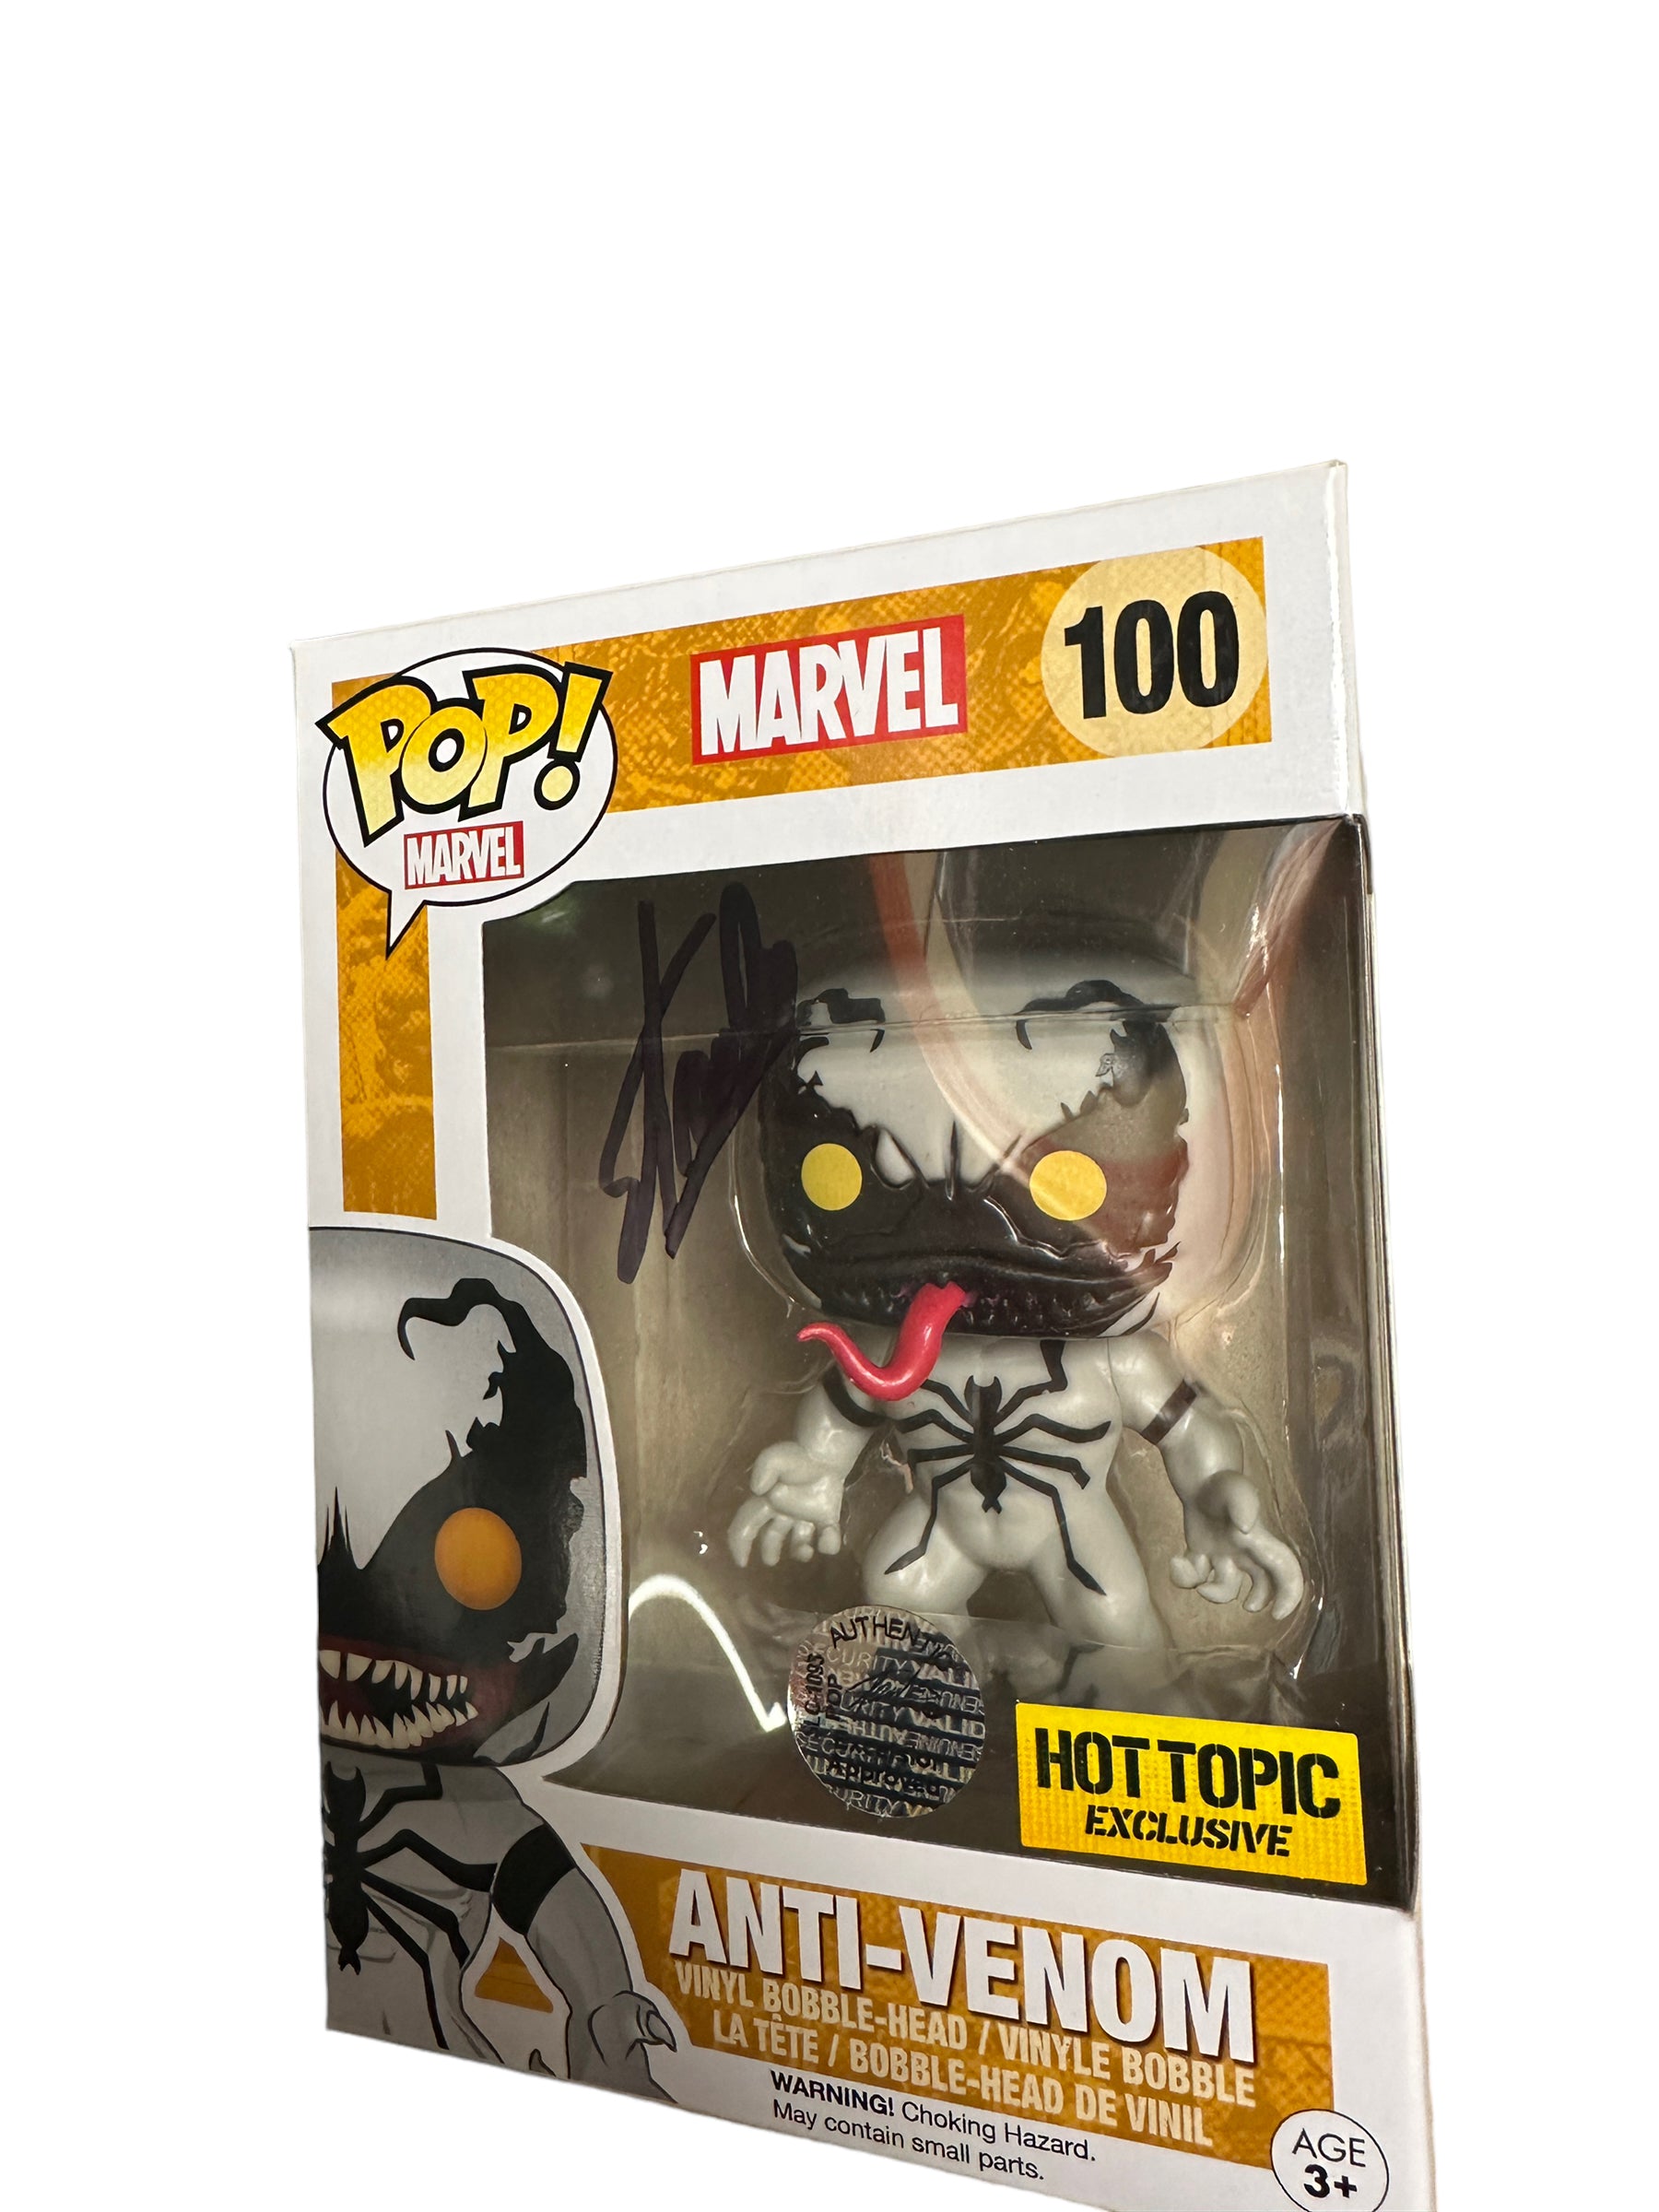 Stan Lee Signed Anti-Venom #100 Funko Pop! - Marvel - Hot Topic Exclus